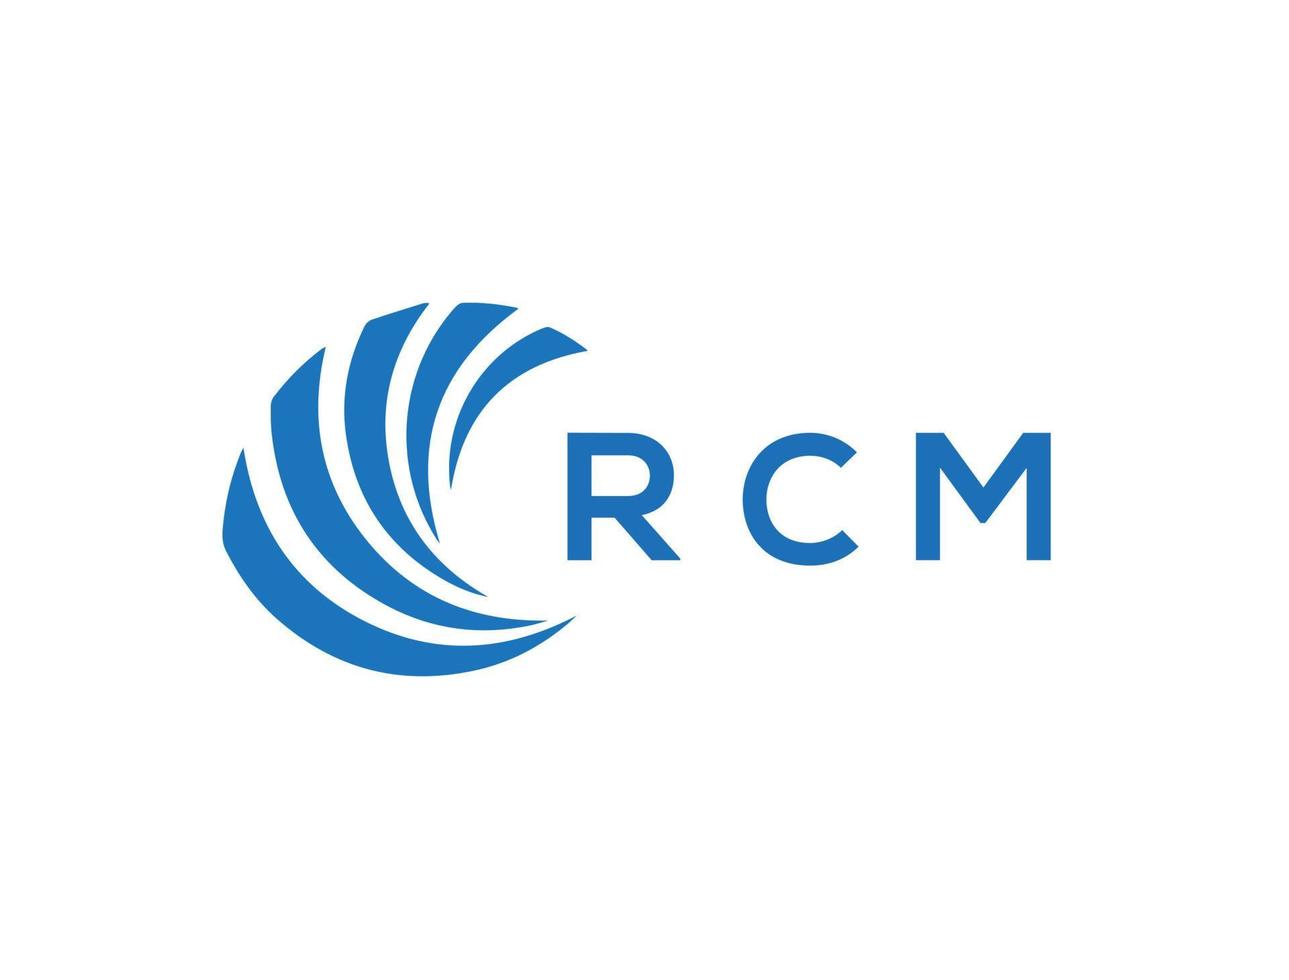 rcm brev logotyp design på vit bakgrund. rcm kreativ cirkel brev logotyp begrepp. rcm brev design. vektor